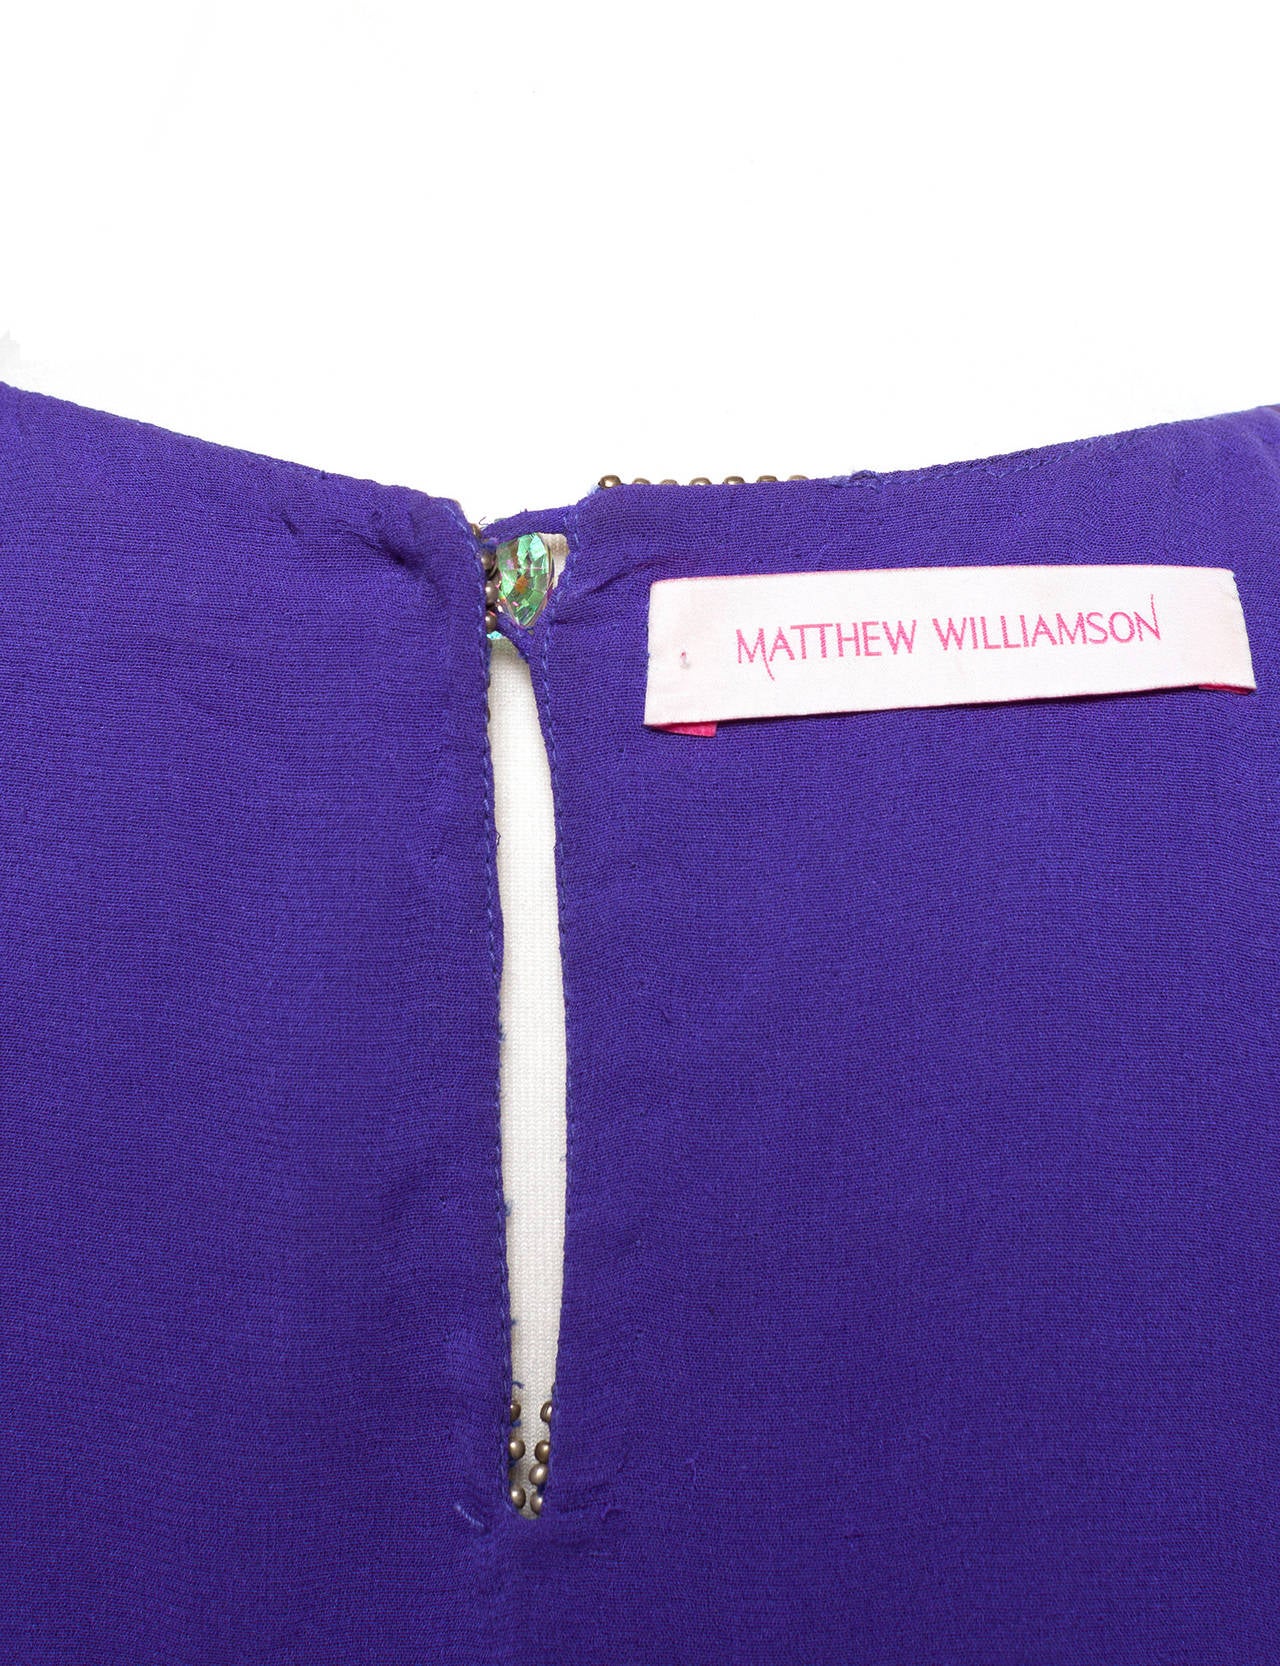 Matthew Williamson purple silk tunic with beaded front, Sz. 10 4